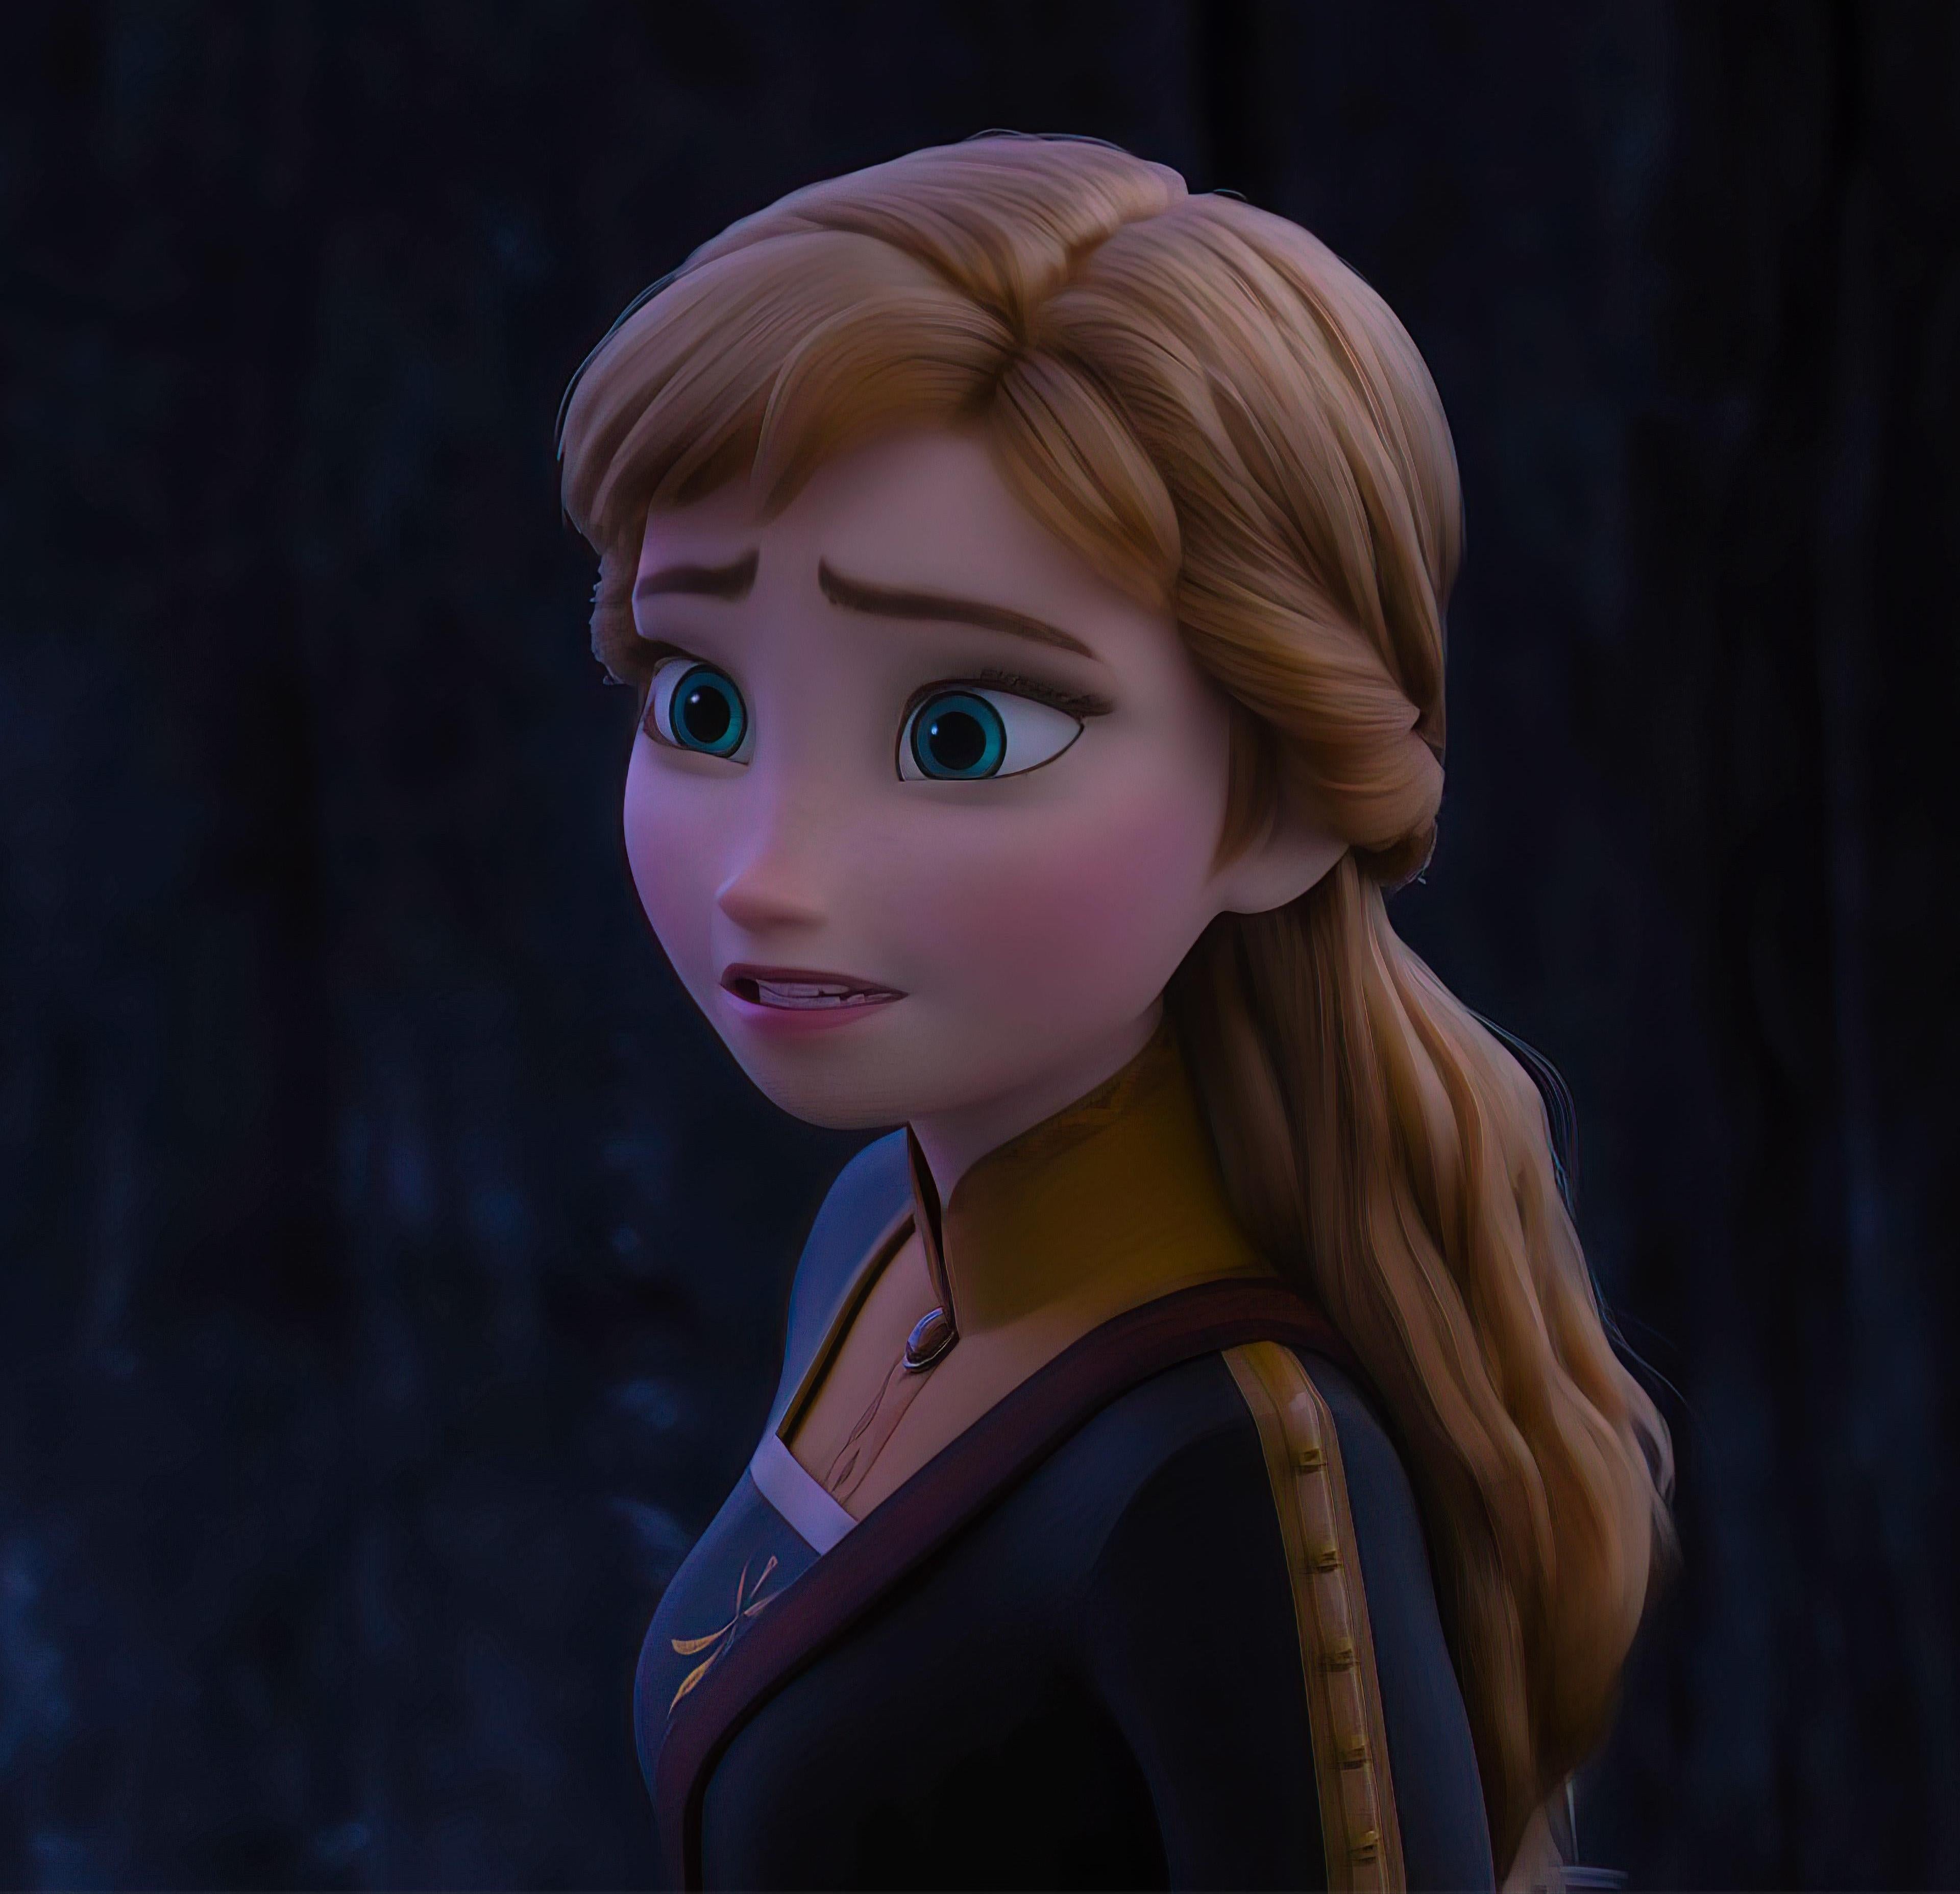 4K] Disney Princess - Anna Frozen 2 (1) by AlexandreGRONDIN on DeviantArt